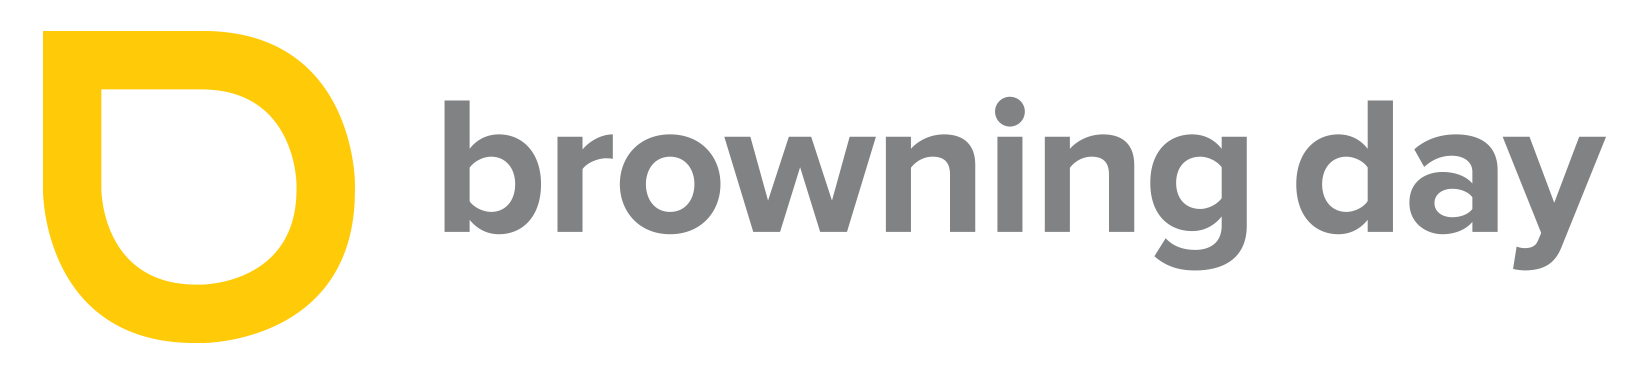 Browning Day logo 2022.png